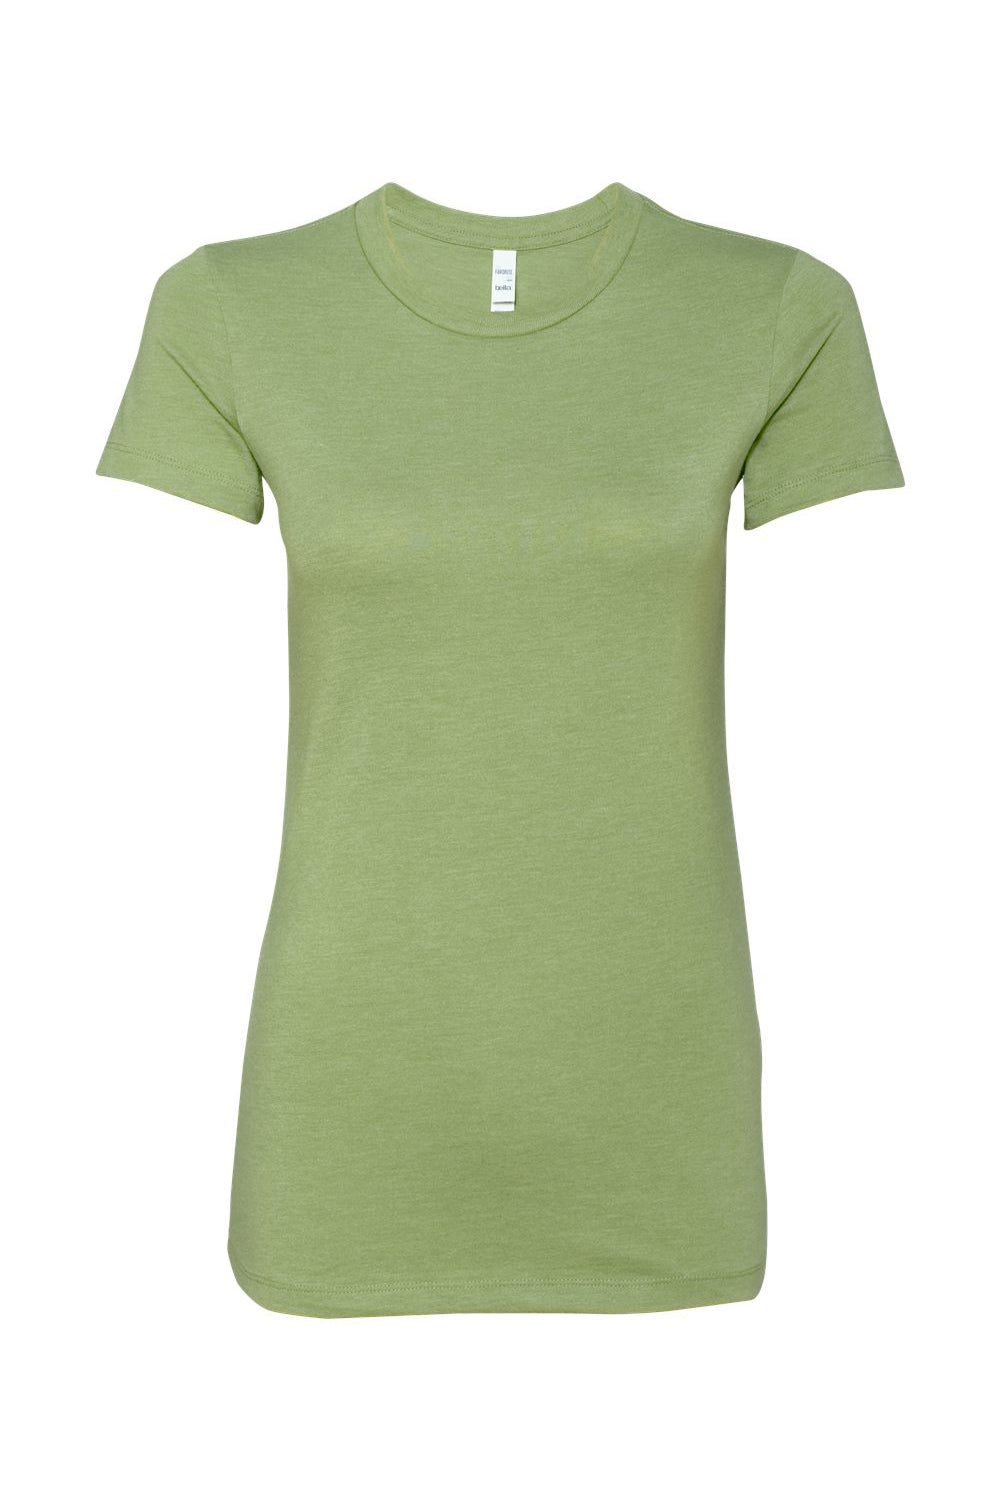 Bella + Canvas BC6004/6004 Womens The Favorite Short Sleeve Crewneck T-Shirt Heather Green Flat Front